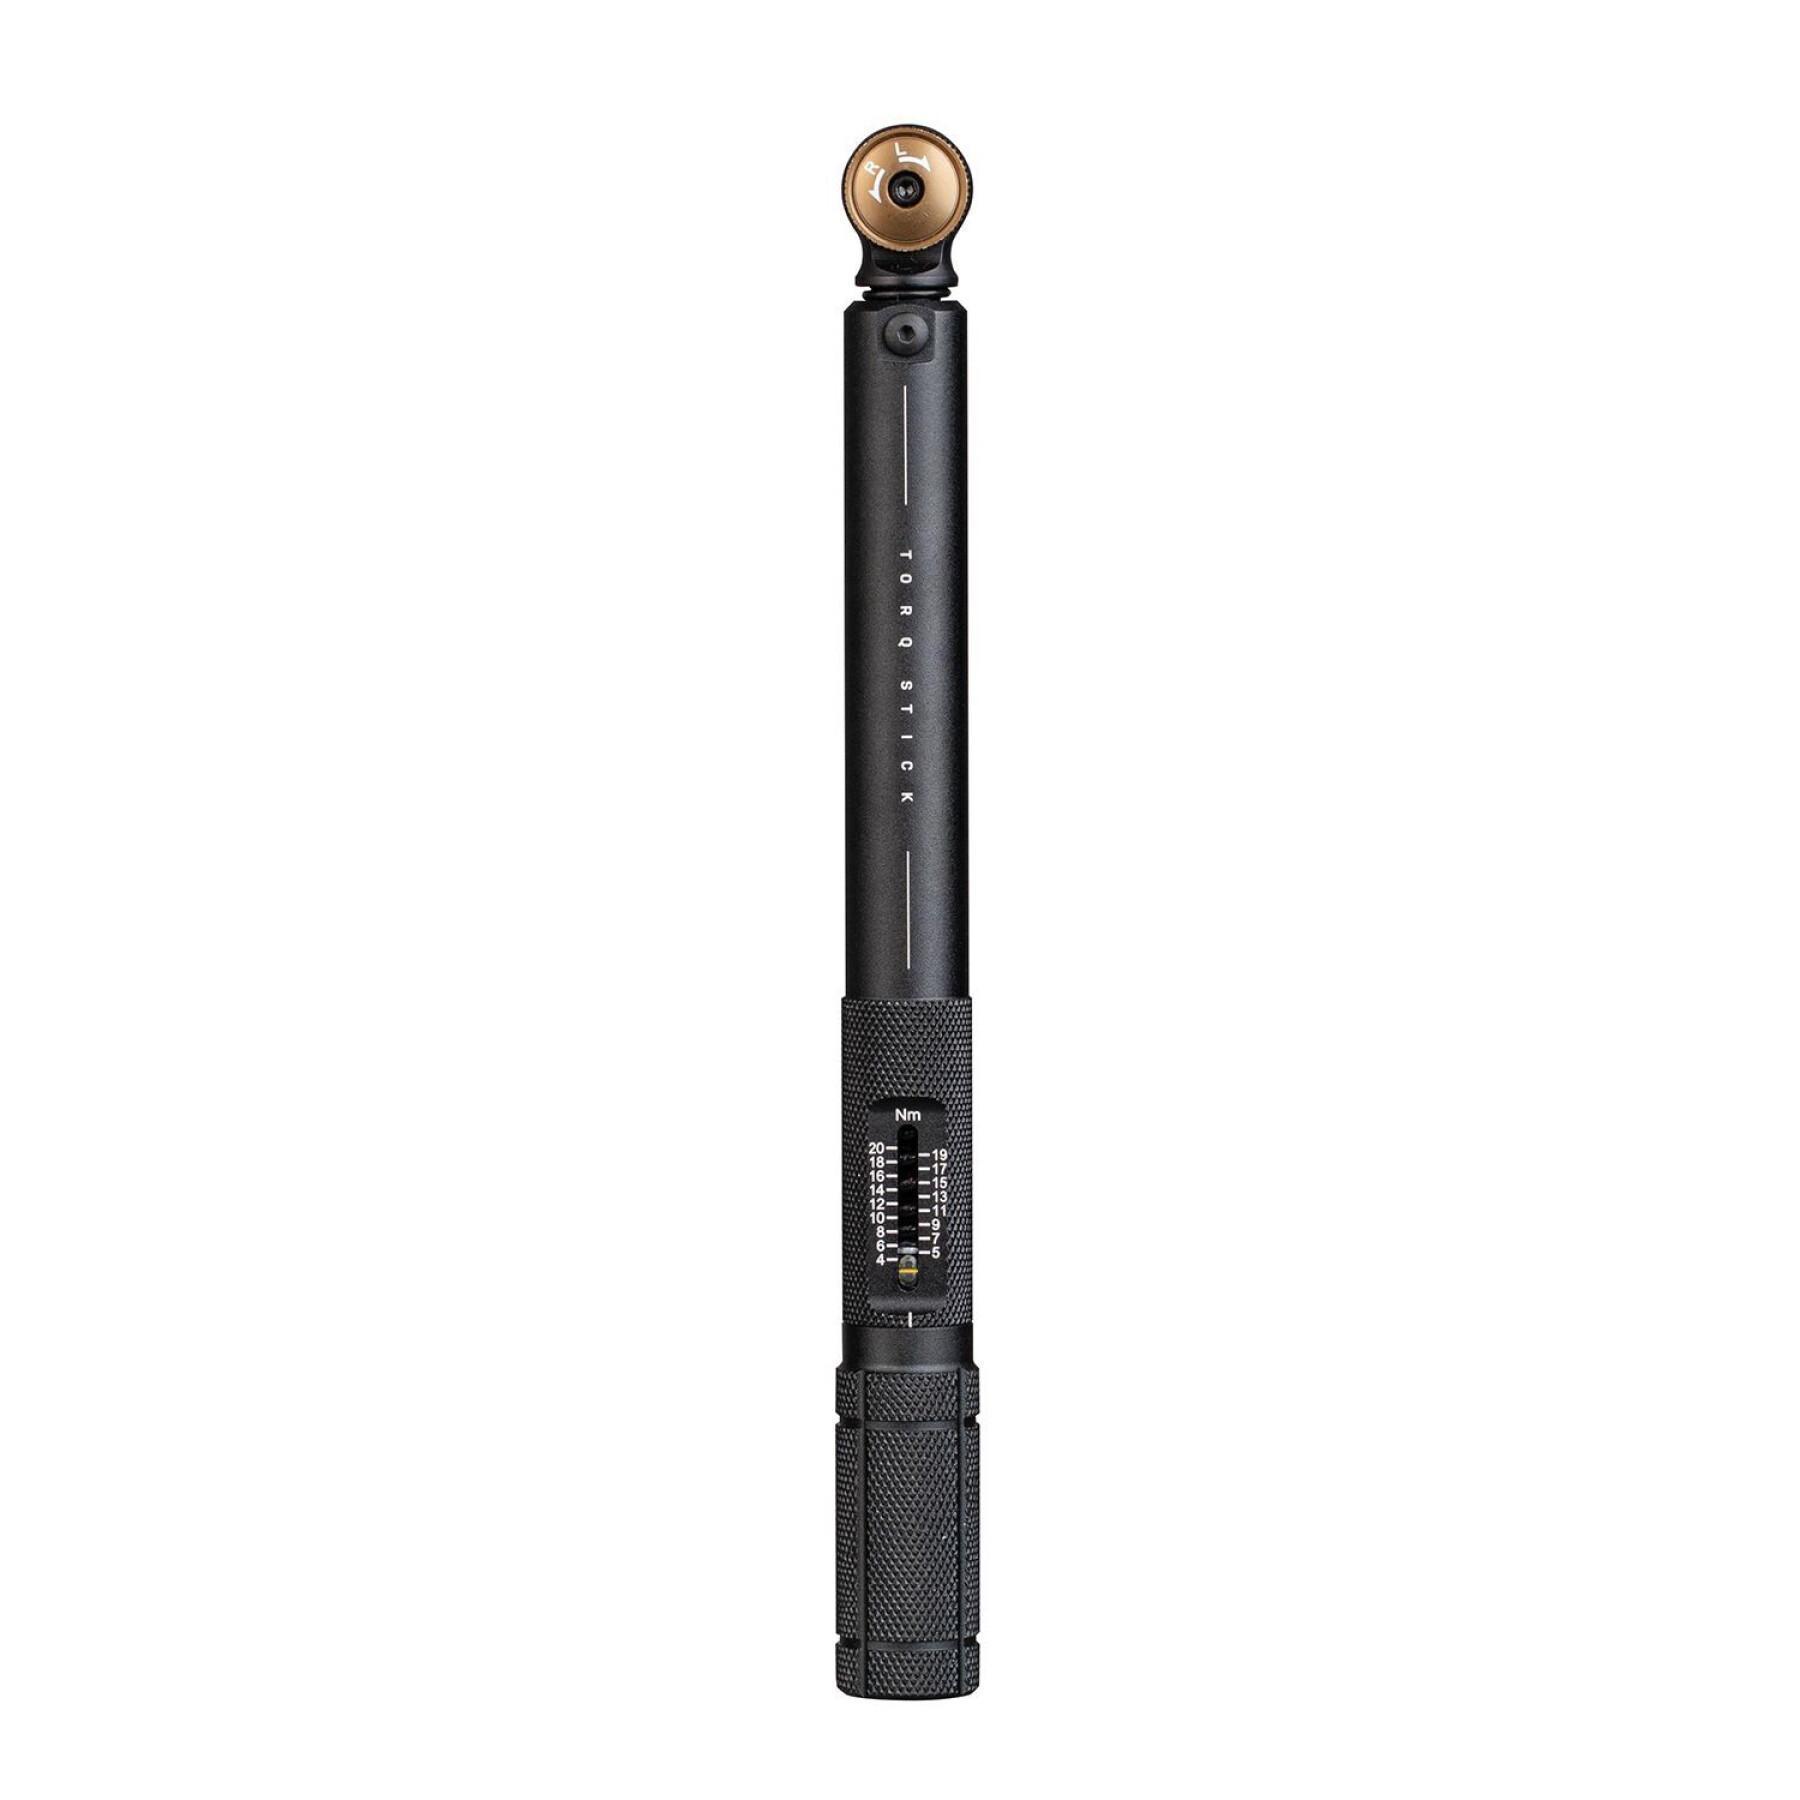 Chiave dinamometrica Topeak Torq Stick Pro 4-20Nm